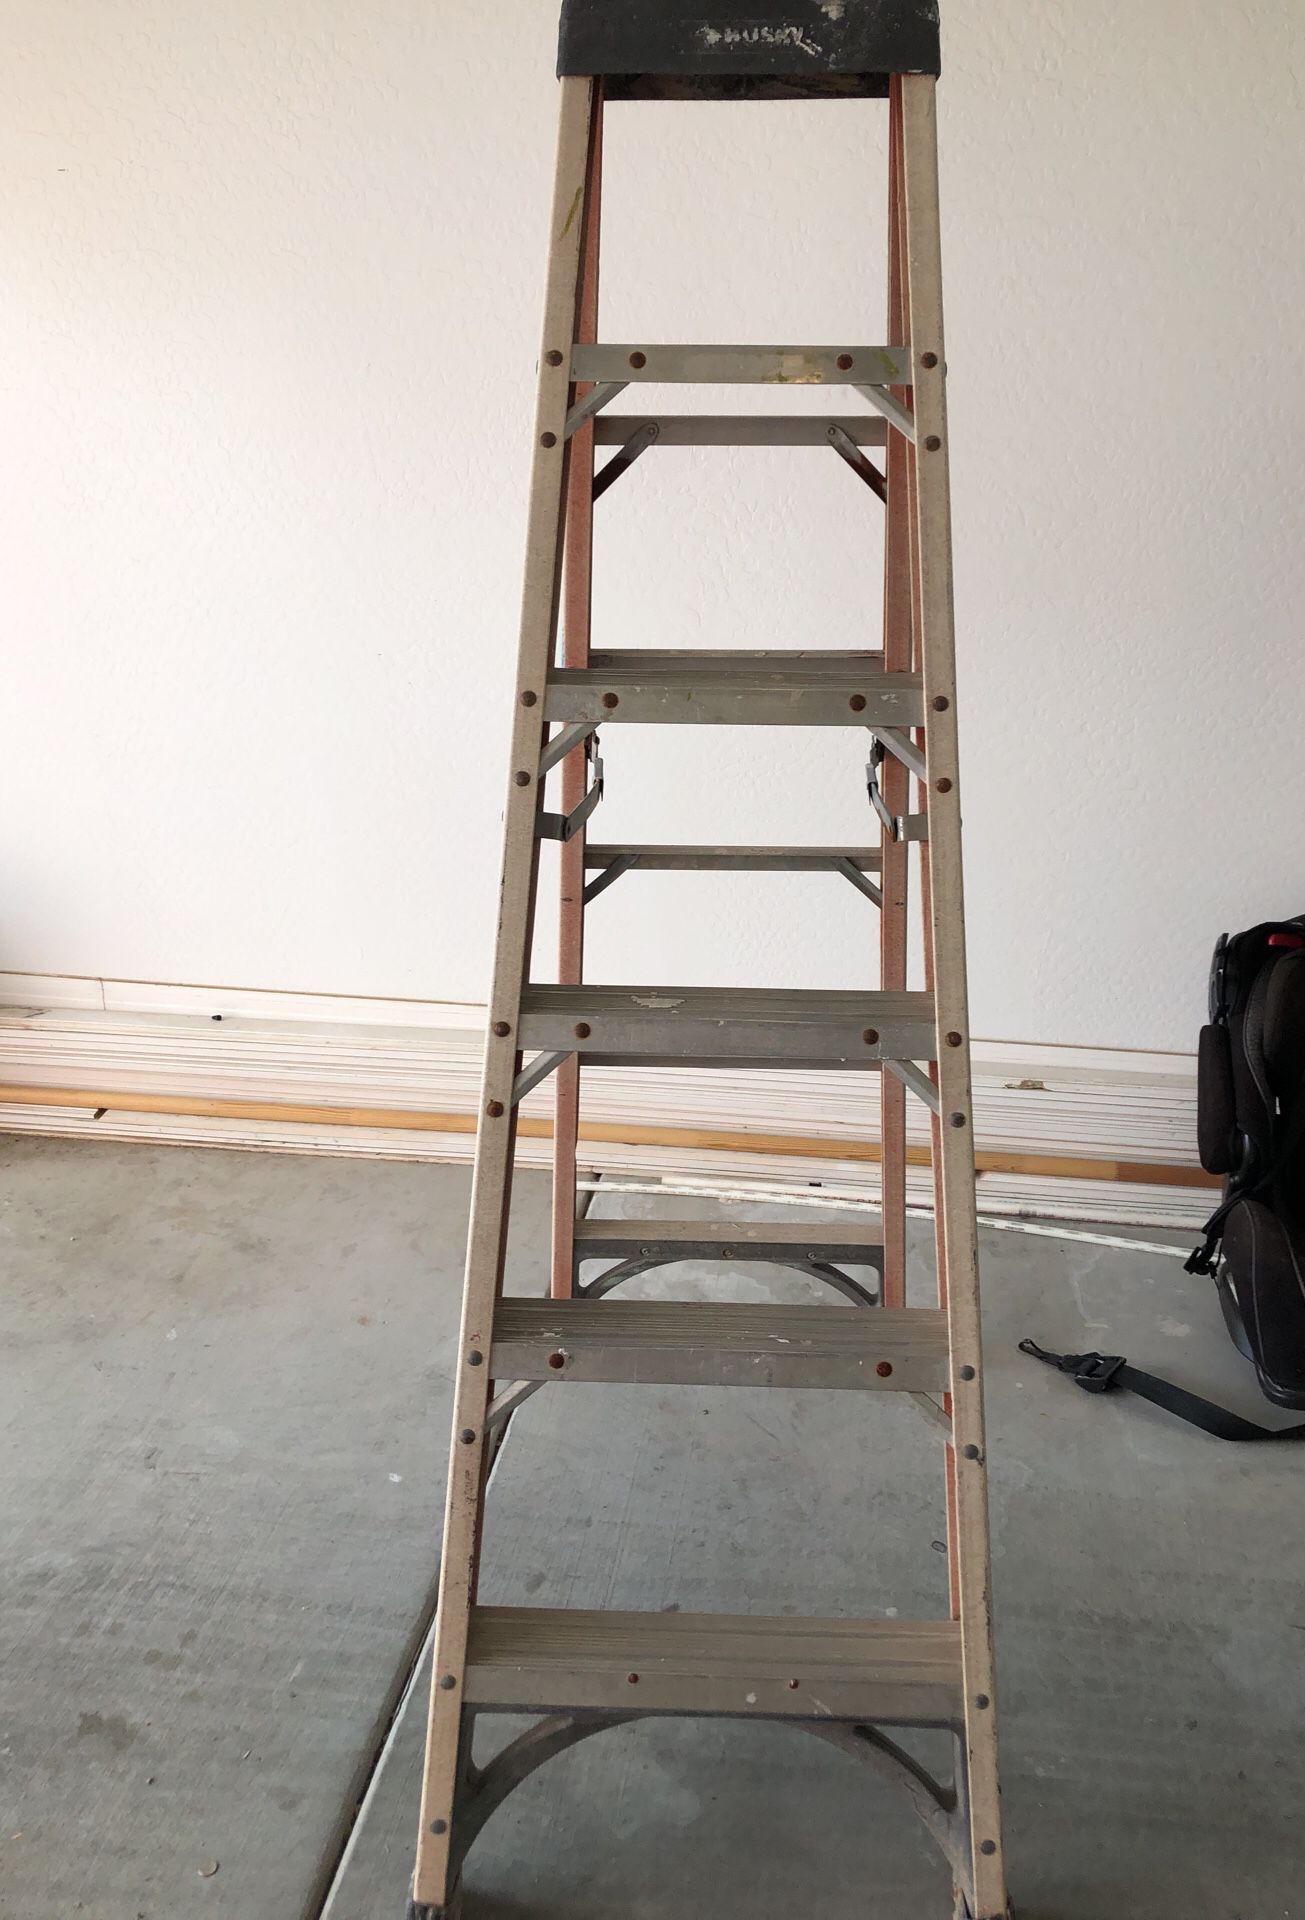 6’ Husky ladder